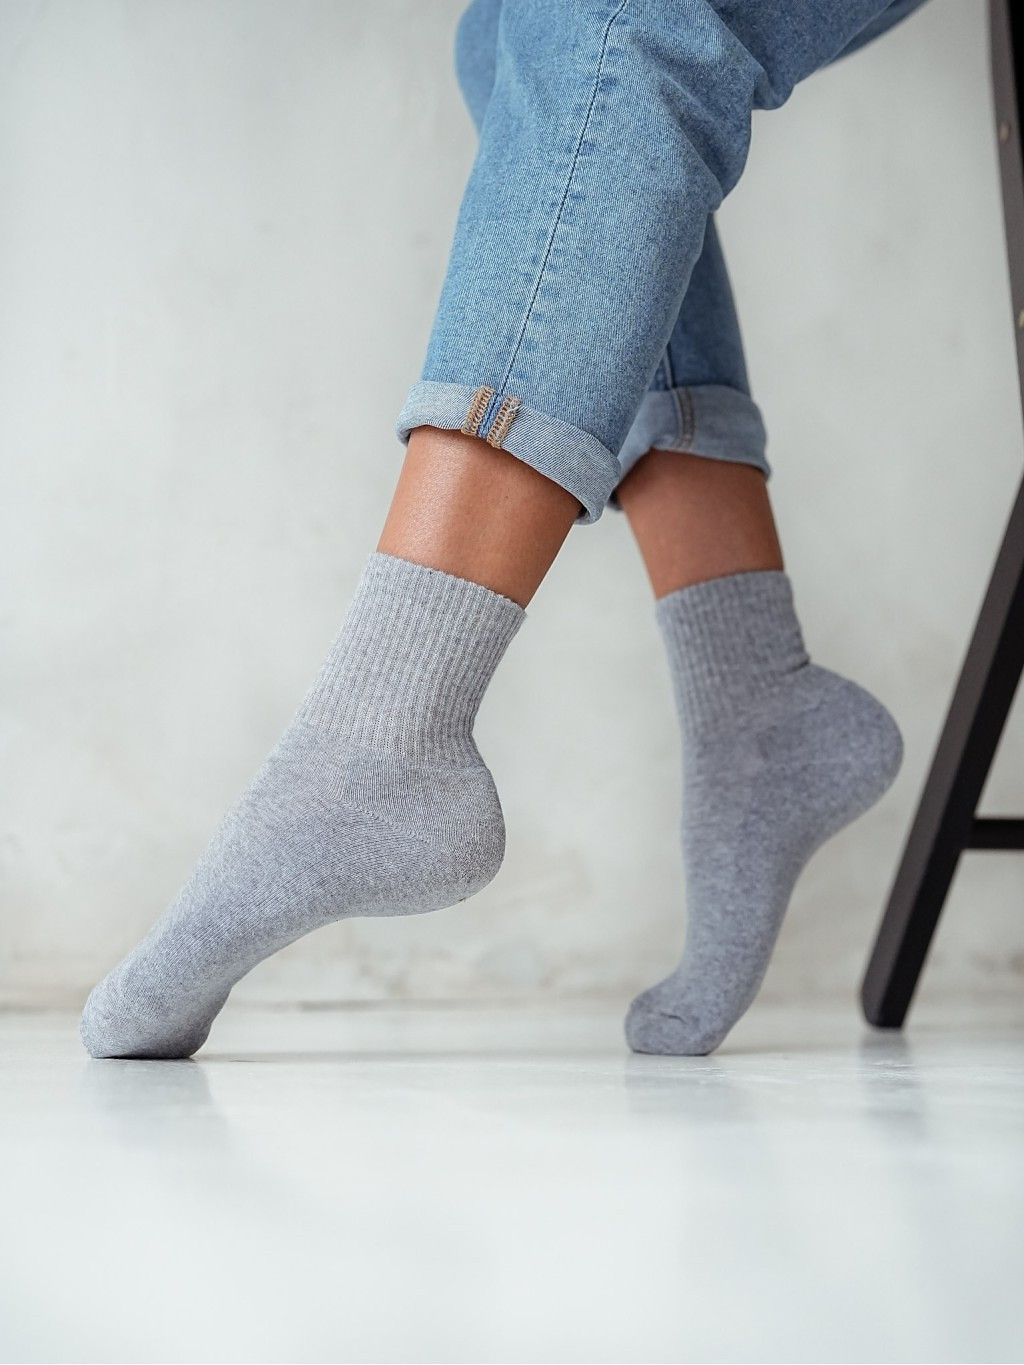 Dámské ponožky Milena 071 Hladké, polofroté 35-41 černá 35-37